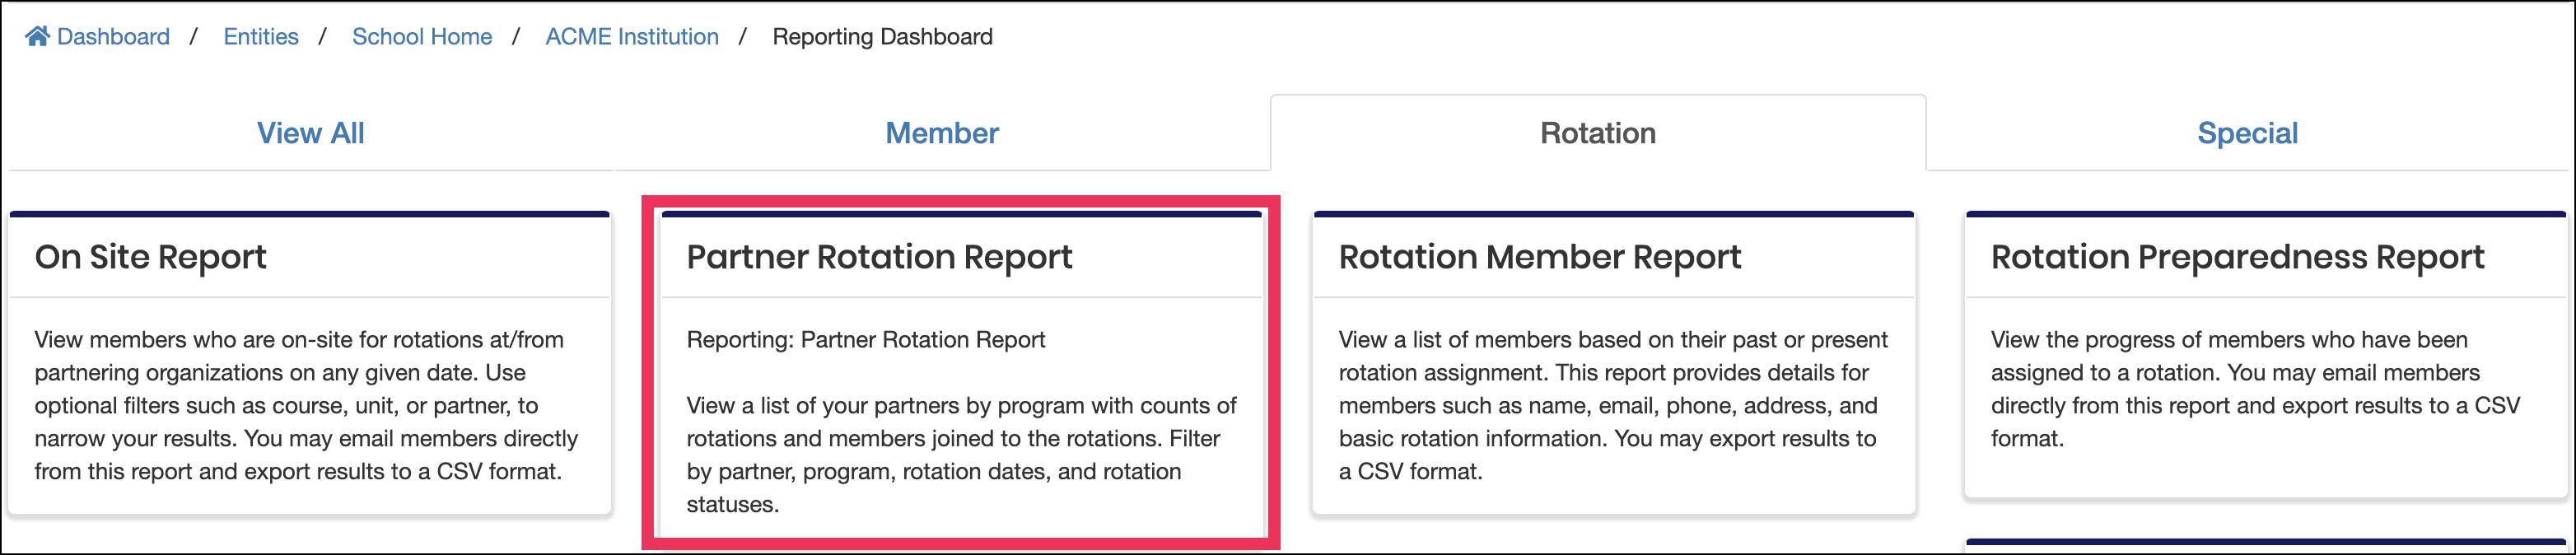 Report Dashboard highlighting Partner Rotation Report